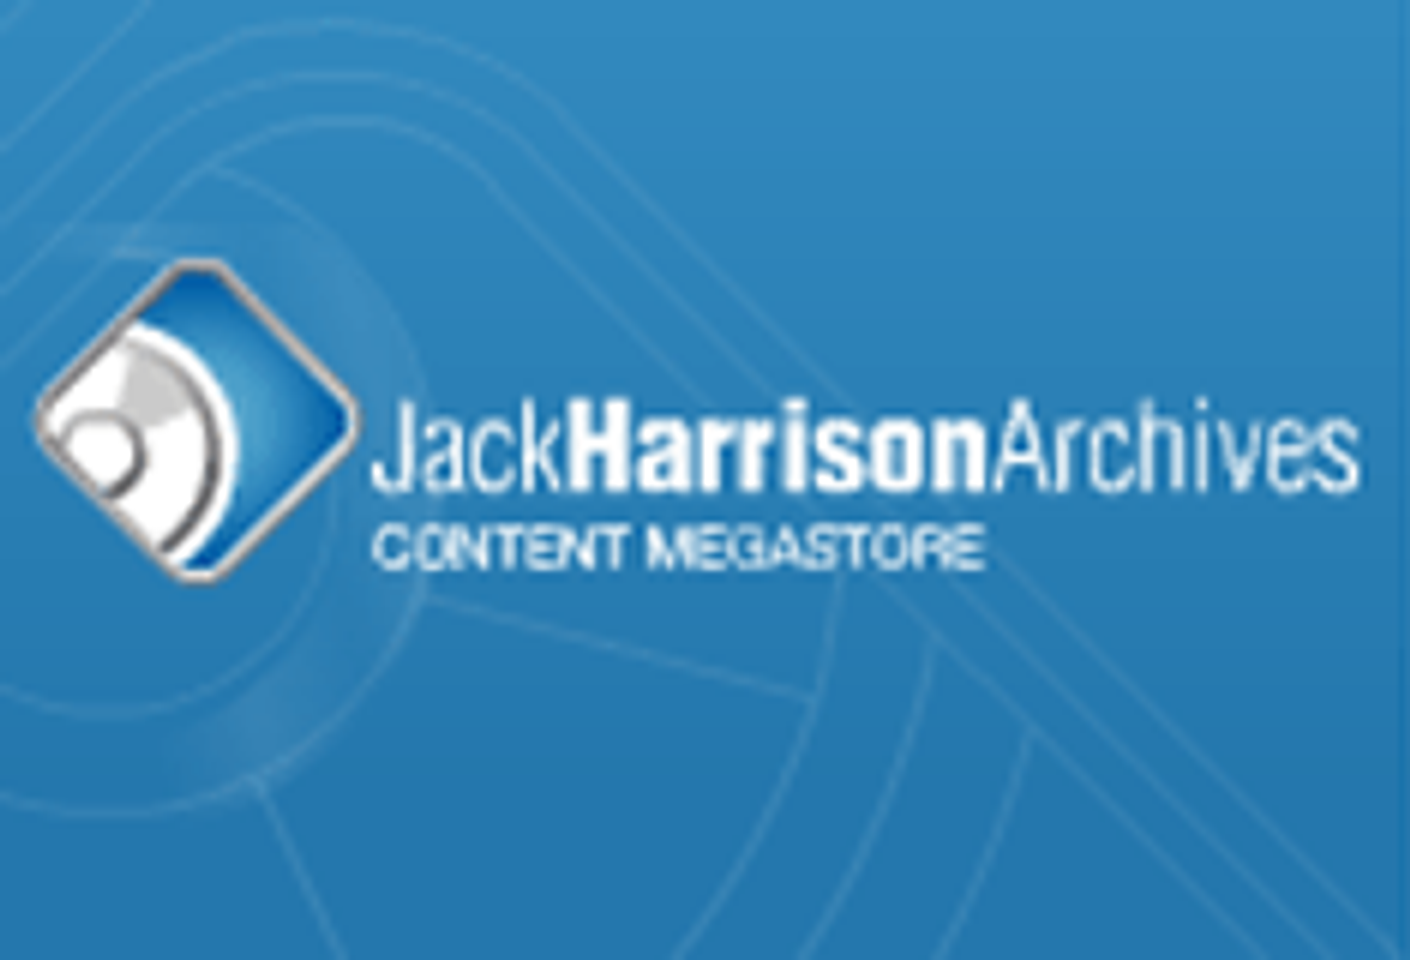 HD Media Productions Releases JackHarrisonArchives.com